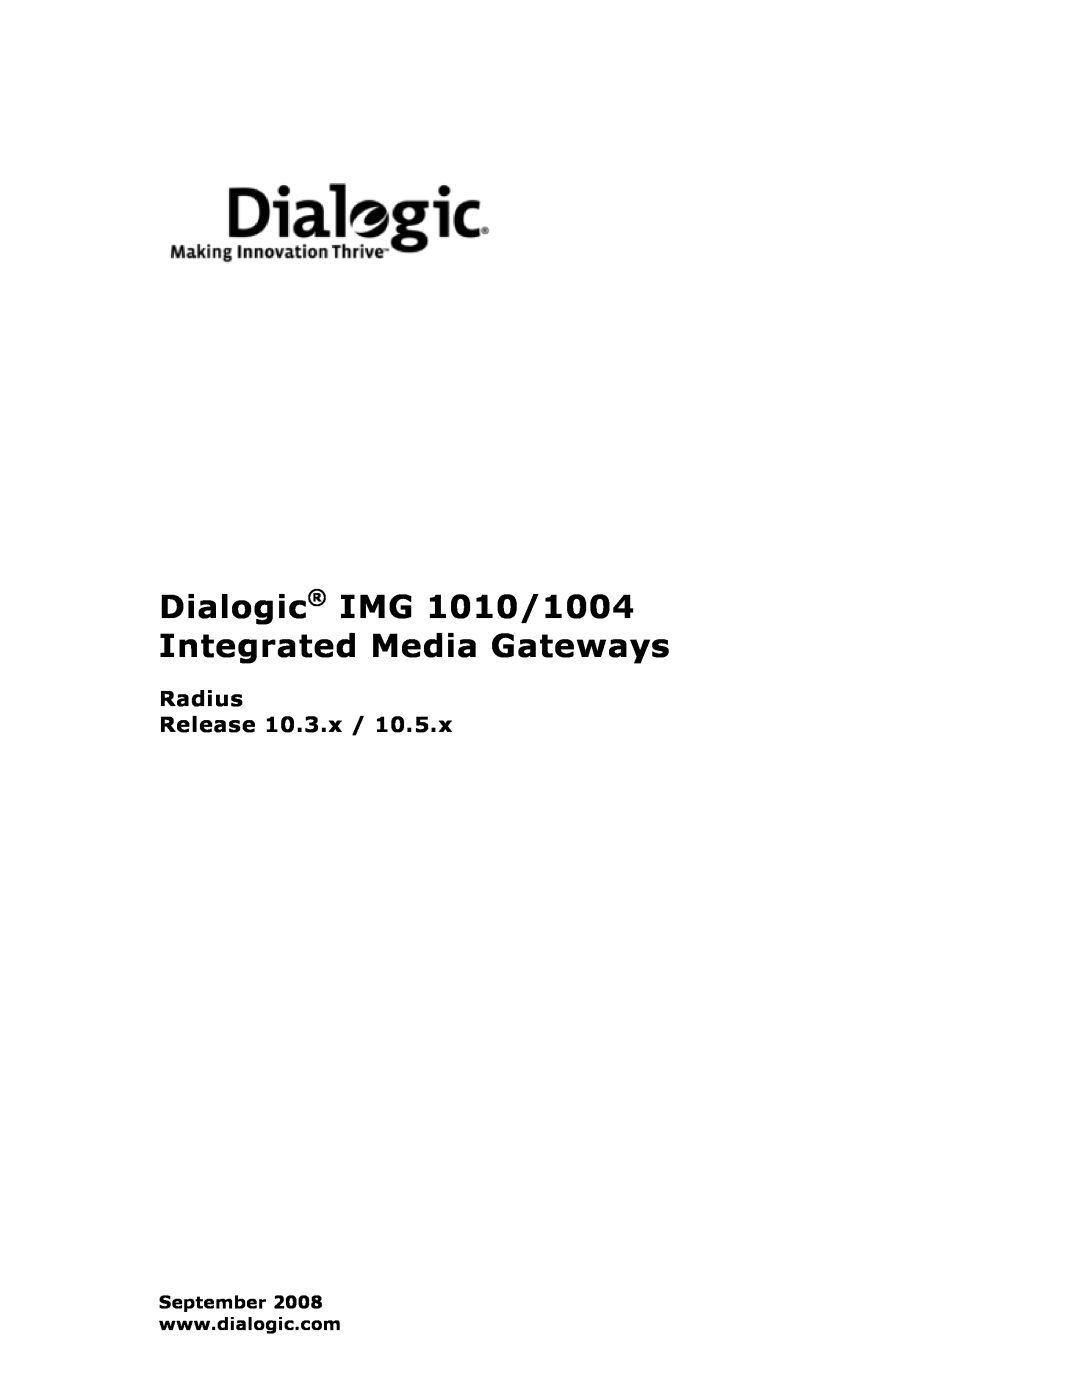 Dialogic manual Dialogic IMG 1010/1004 Integrated Media Gateways, Radius Release 10.3.x 